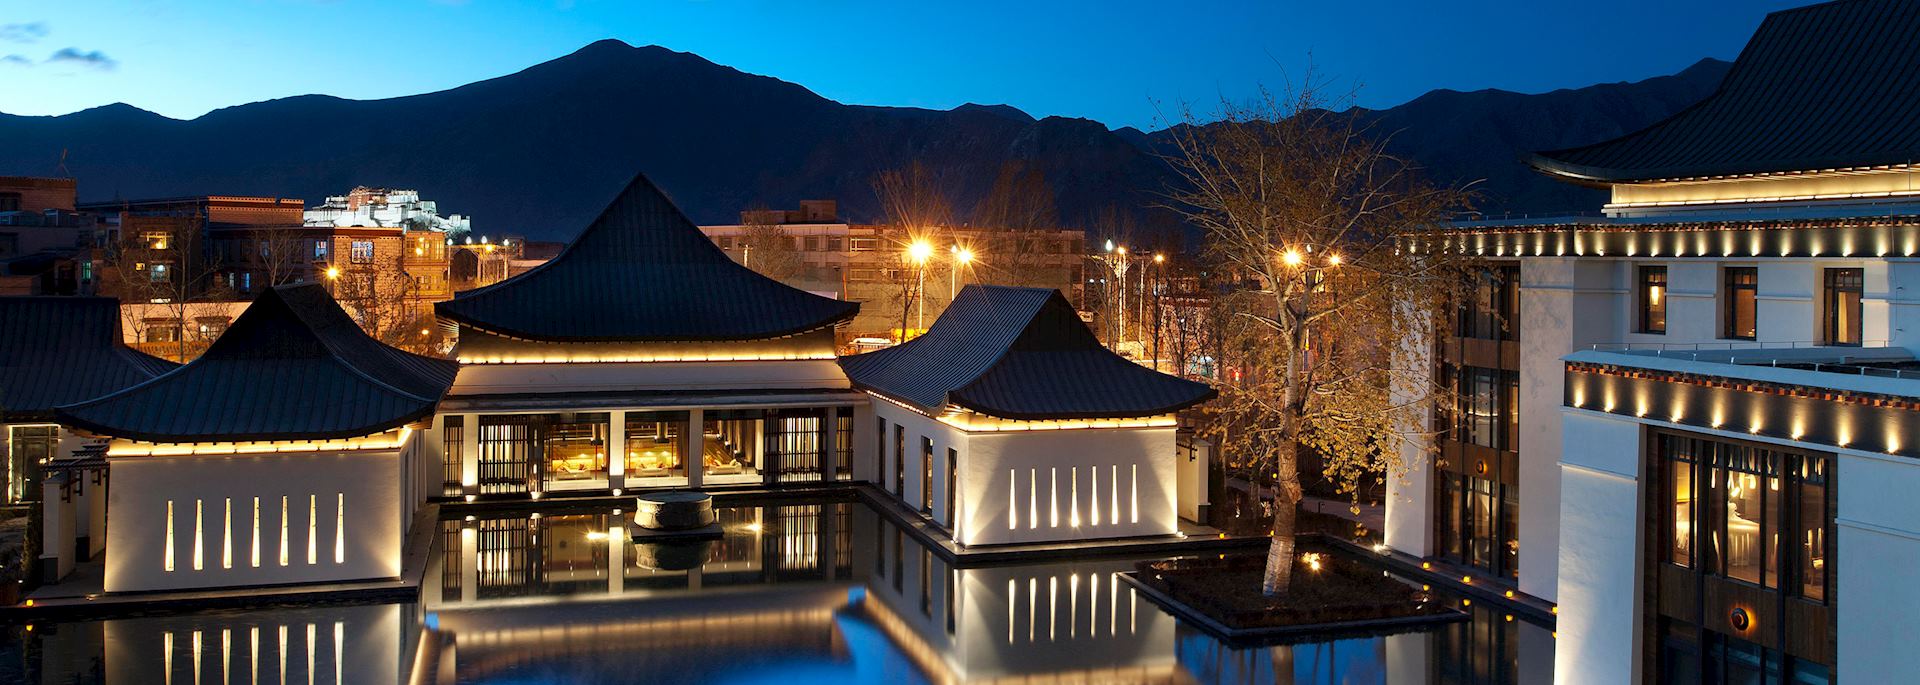 St Regis Lhasa Resort, Lhasa